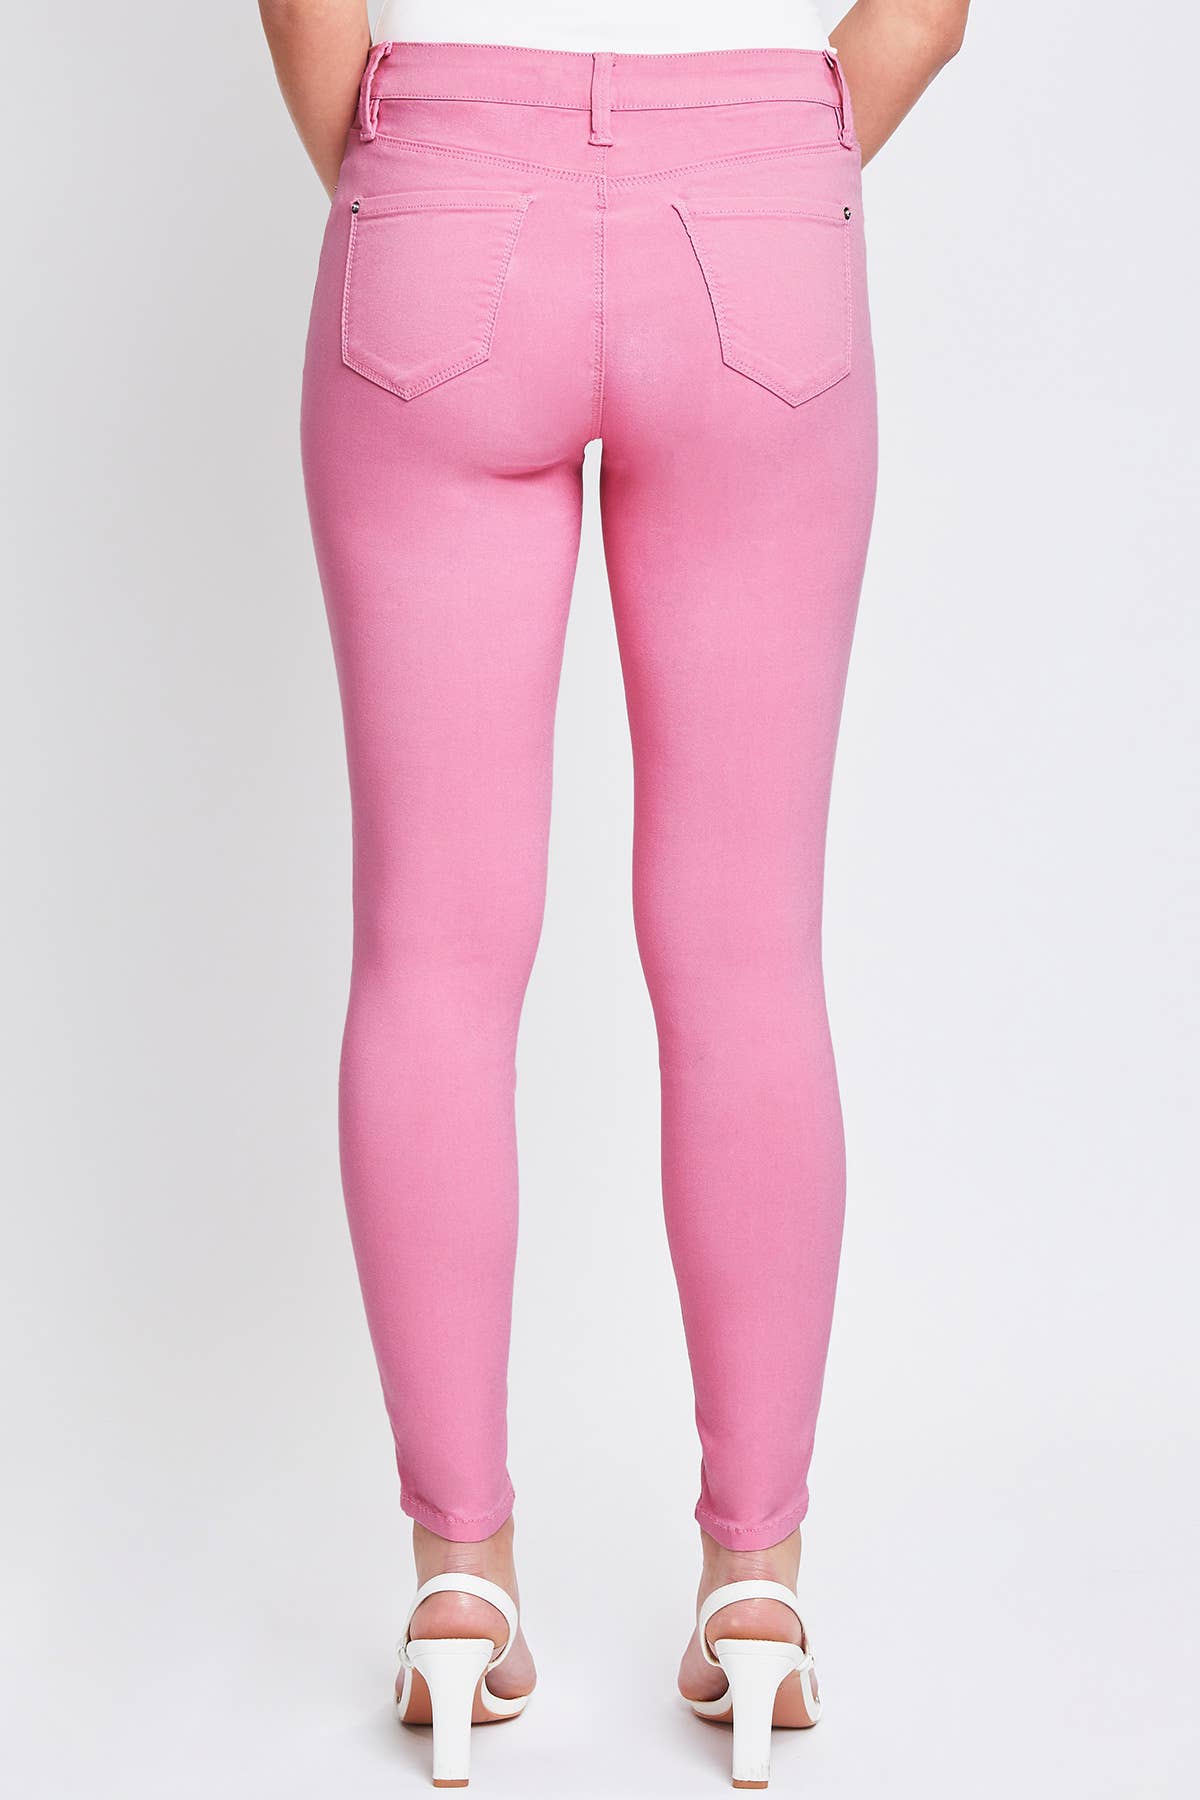 Hyperstretch Mid-Rise Skinny Jean: Junior / Flamingo